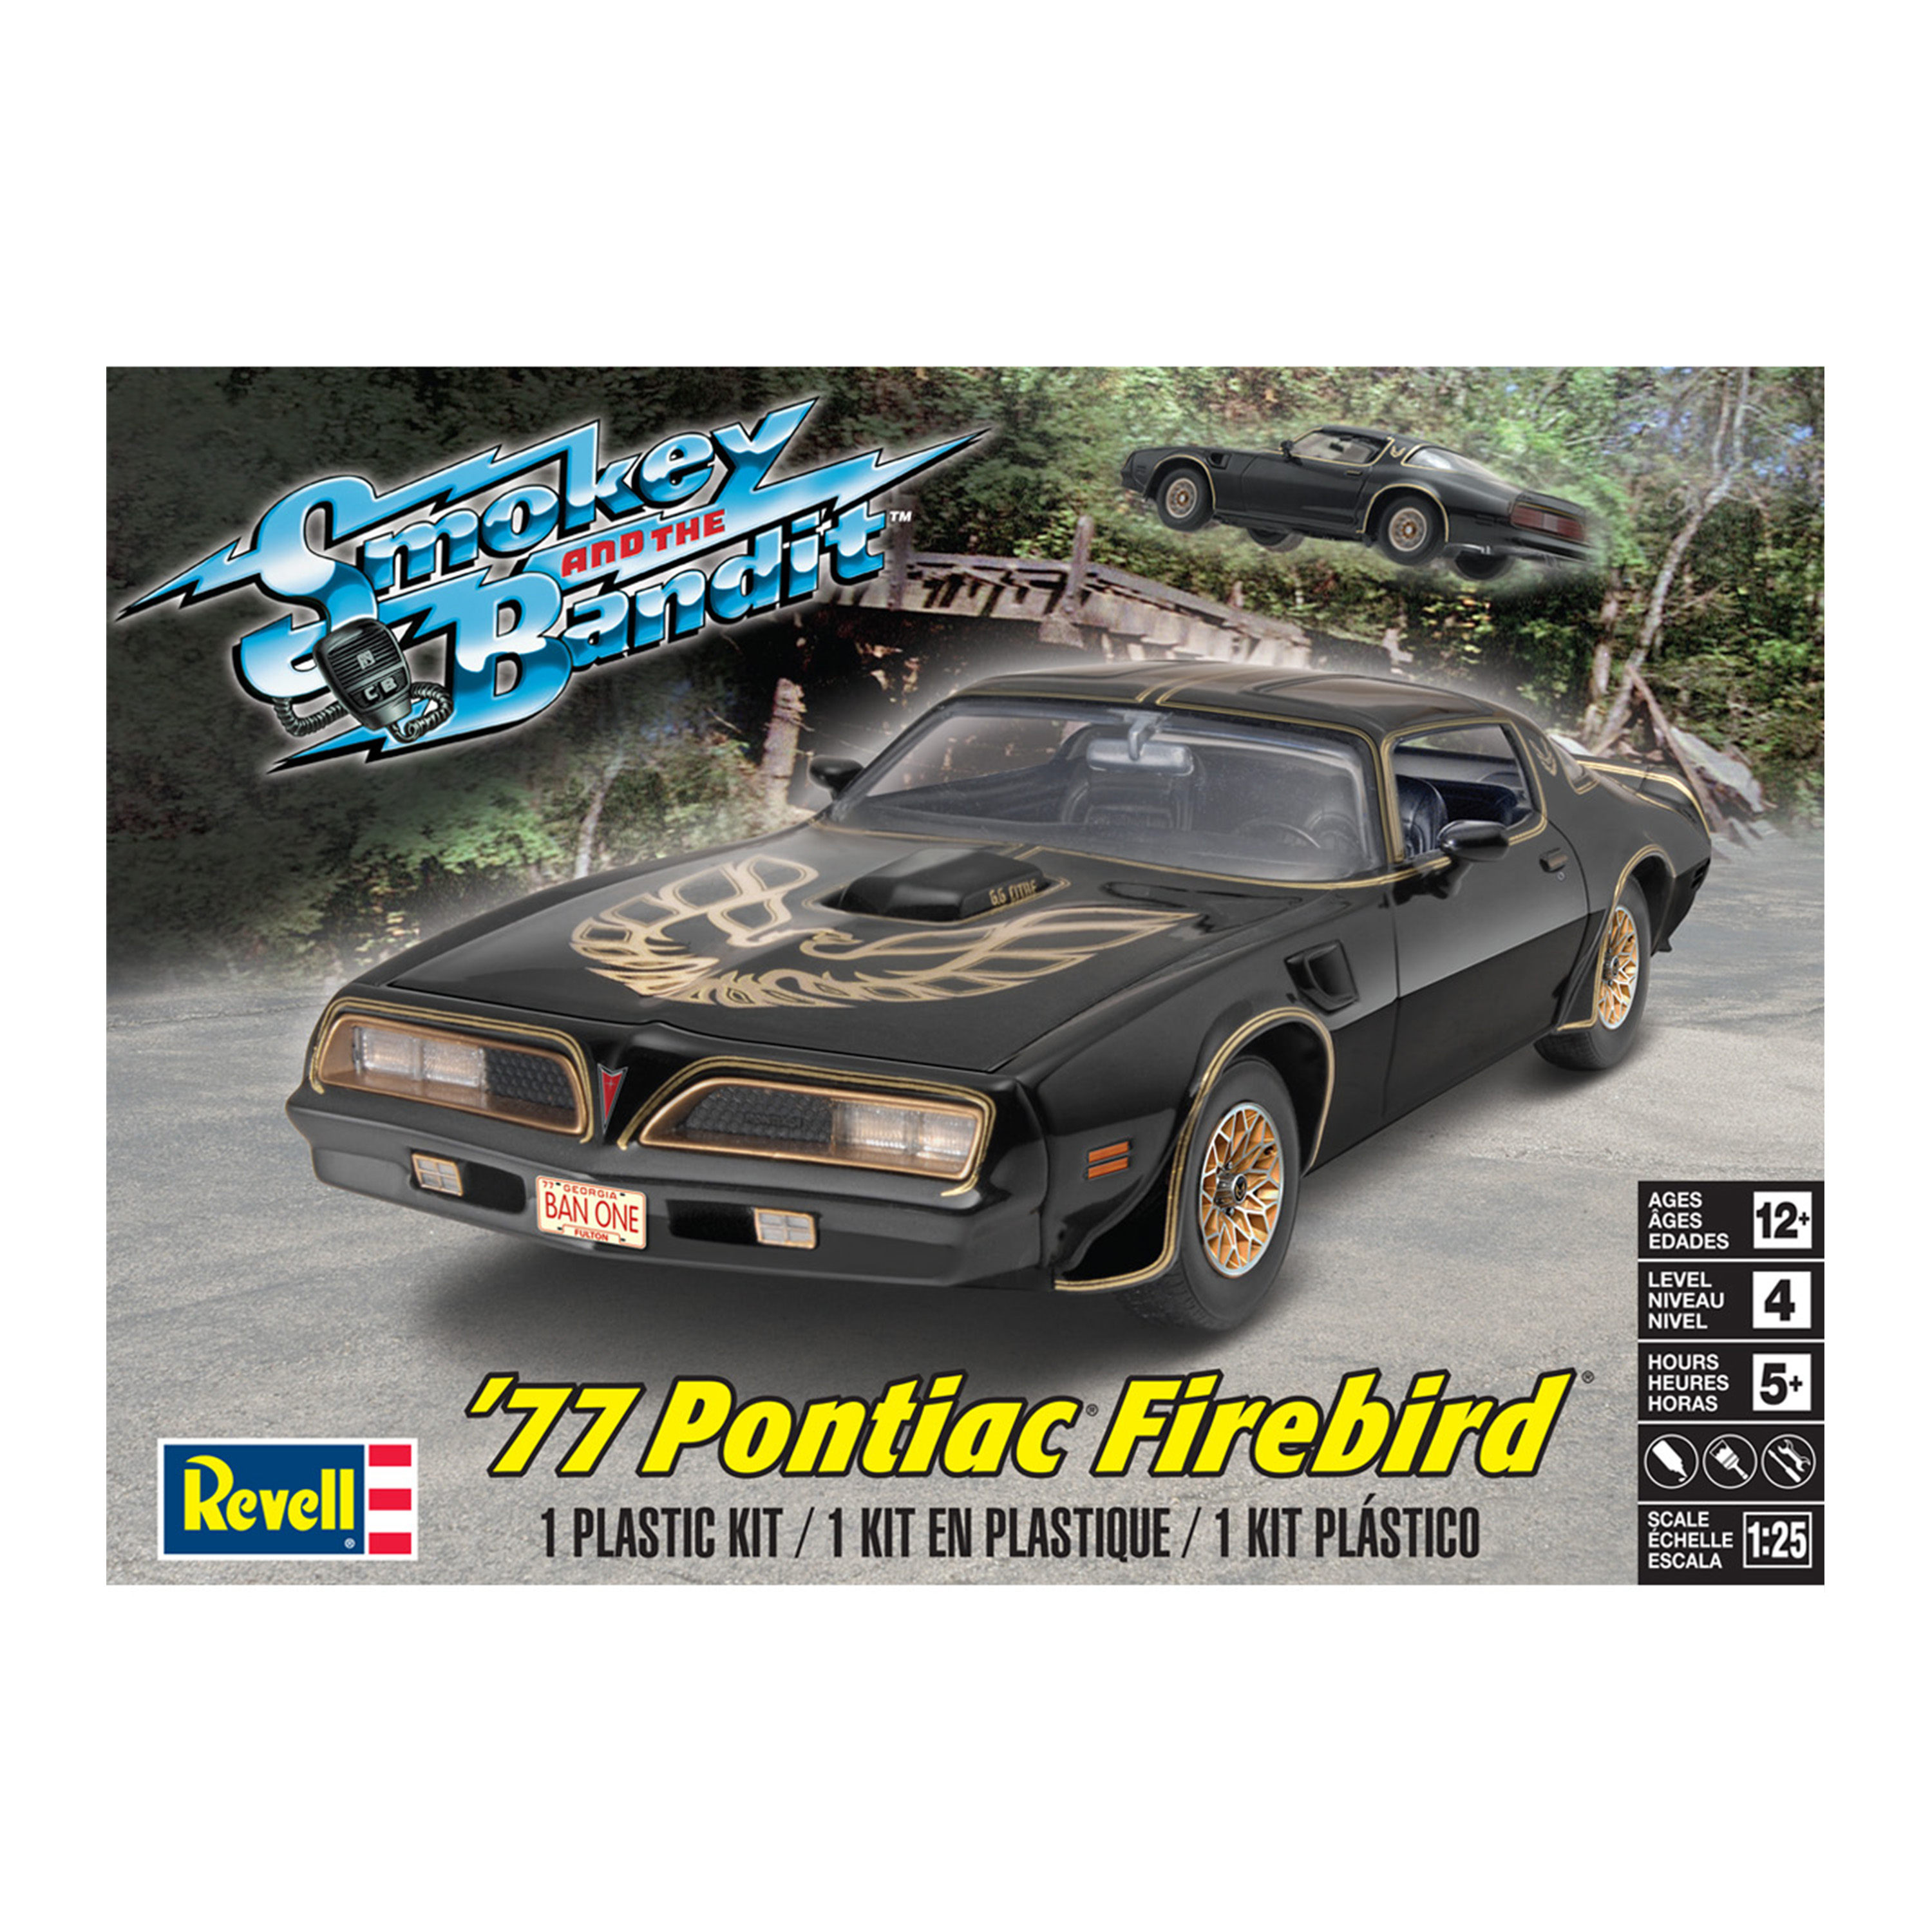 Revell - Smokey and the Bandit 1977 Pontiac Firebird Plastic Model Kit - image 2 of 5